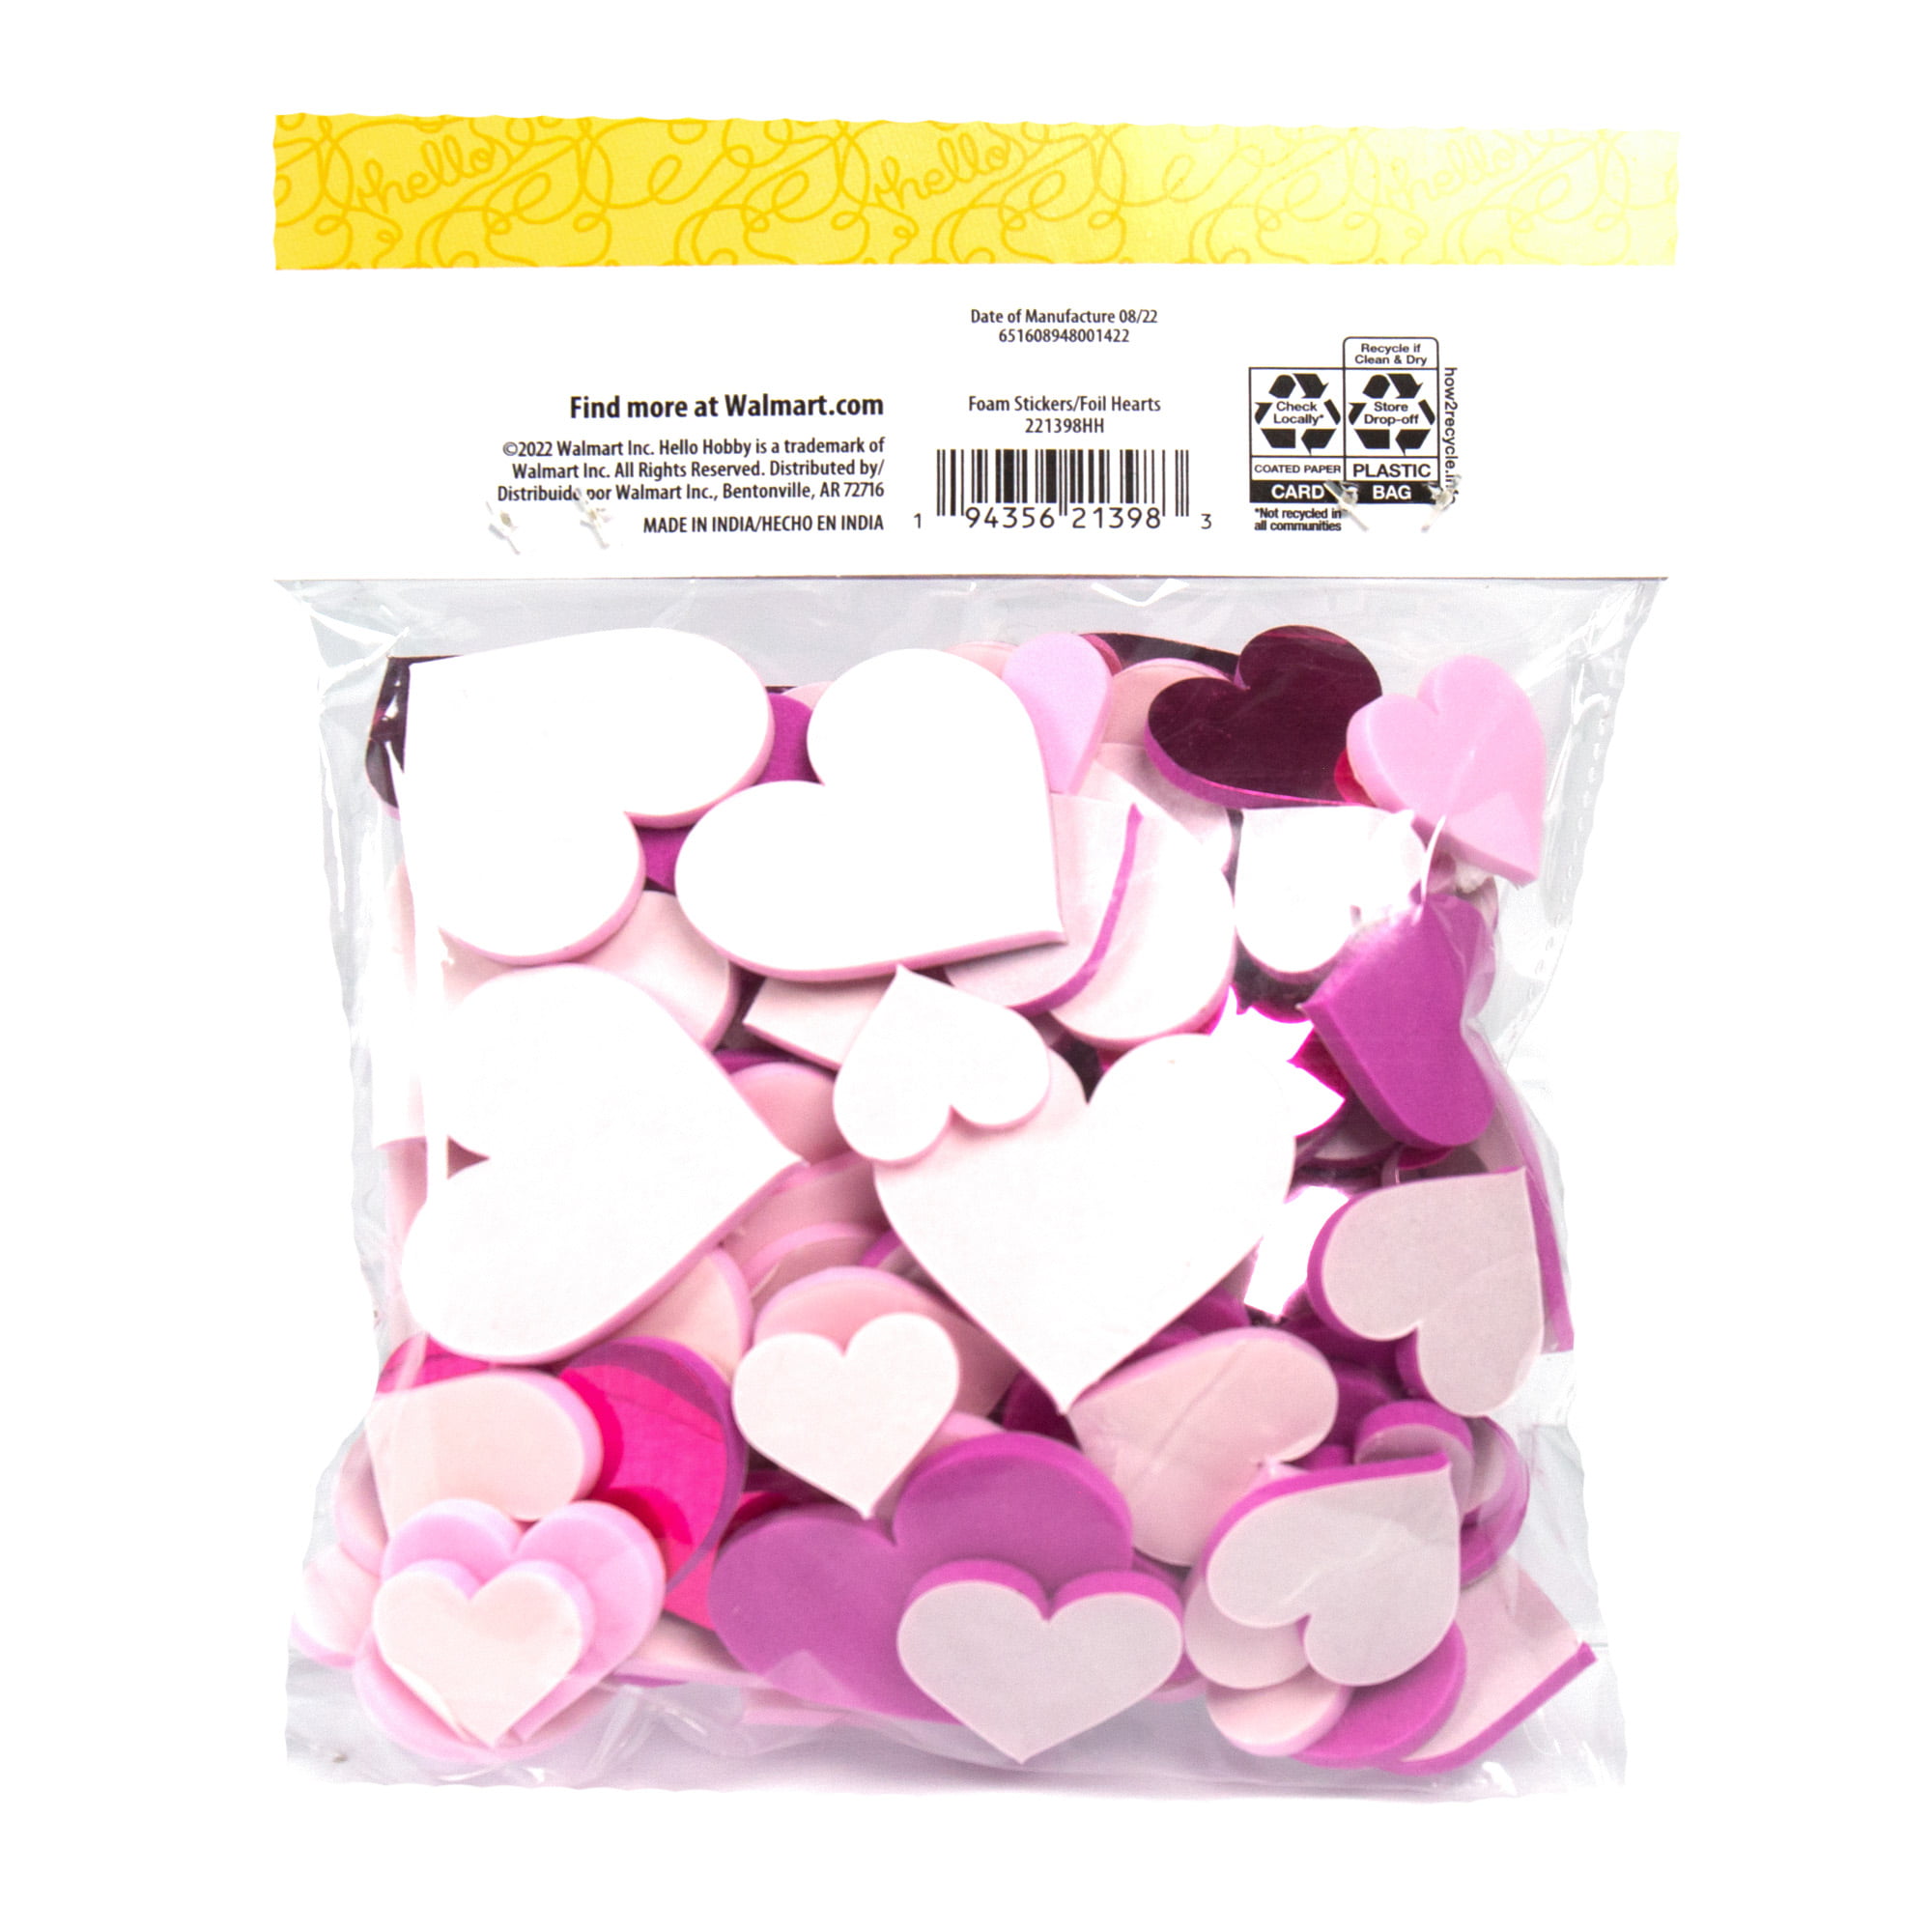 Foamies Mini Heart Stickers (180)* – Inspire-Create